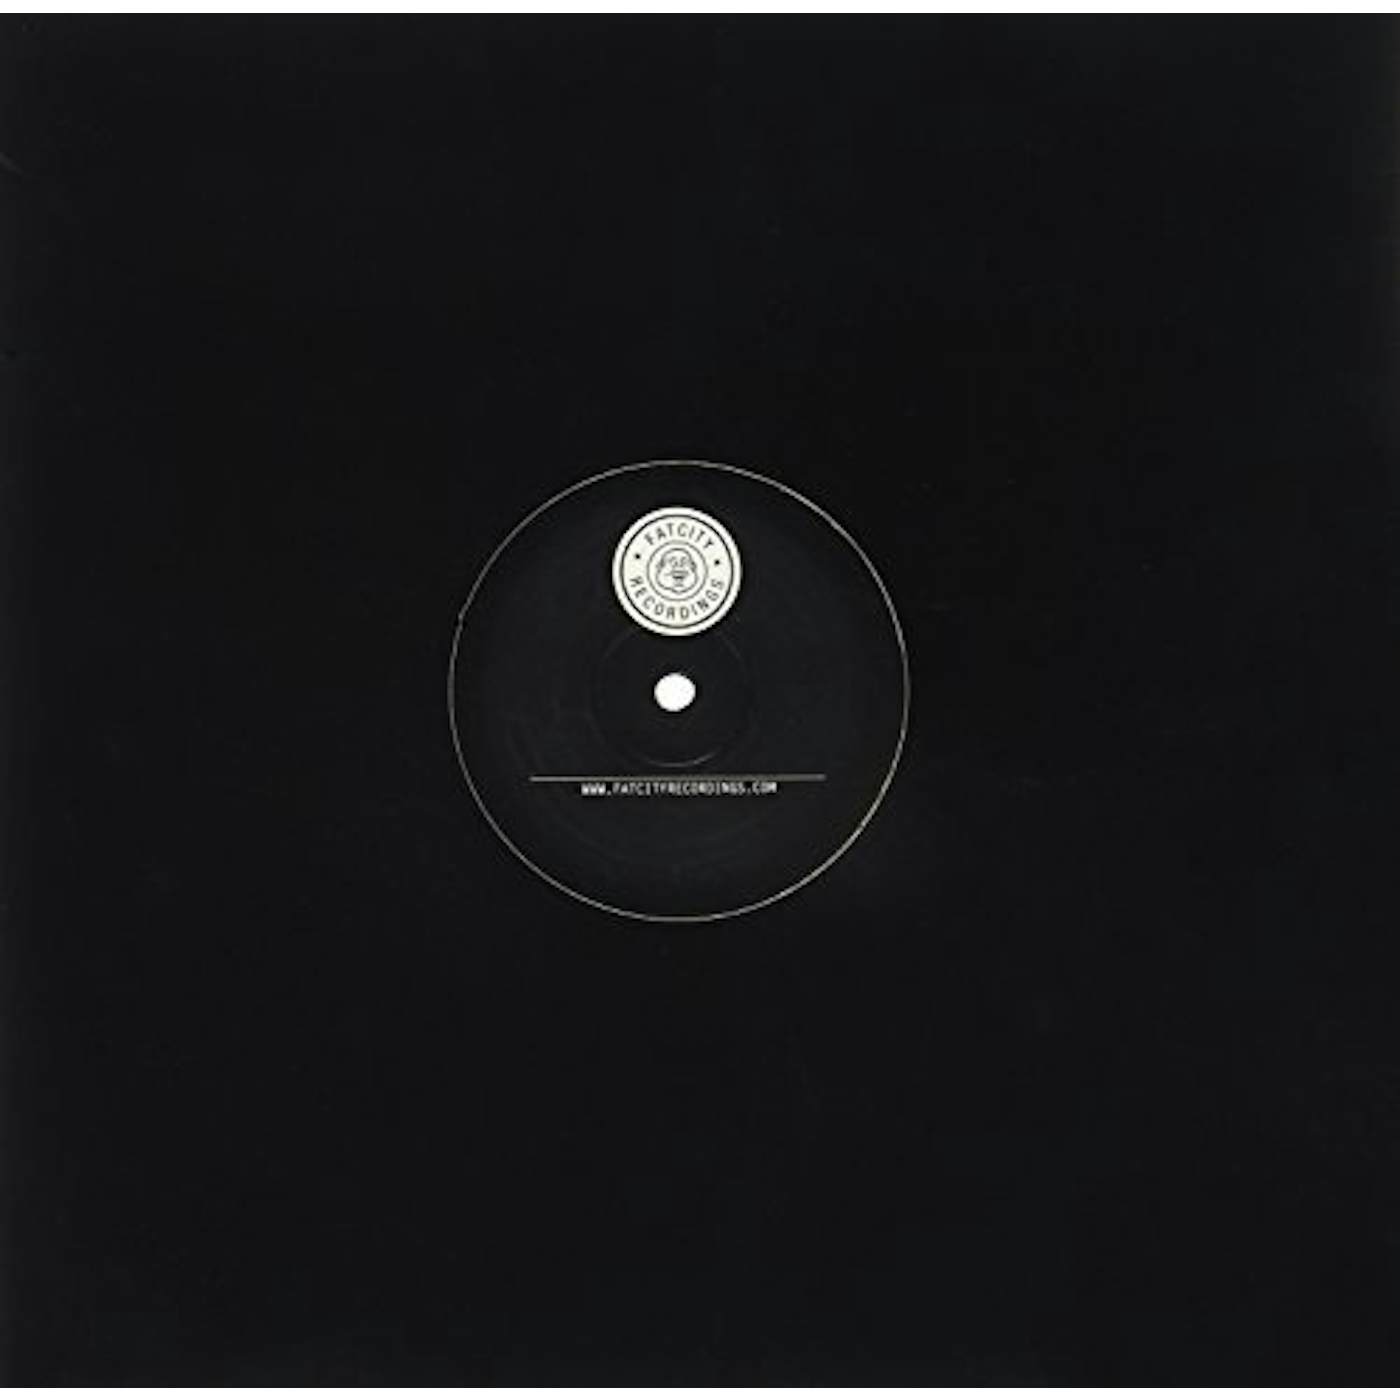 Hizatron PRODUCER 3 PART 2 Vinyl Record - UK Release